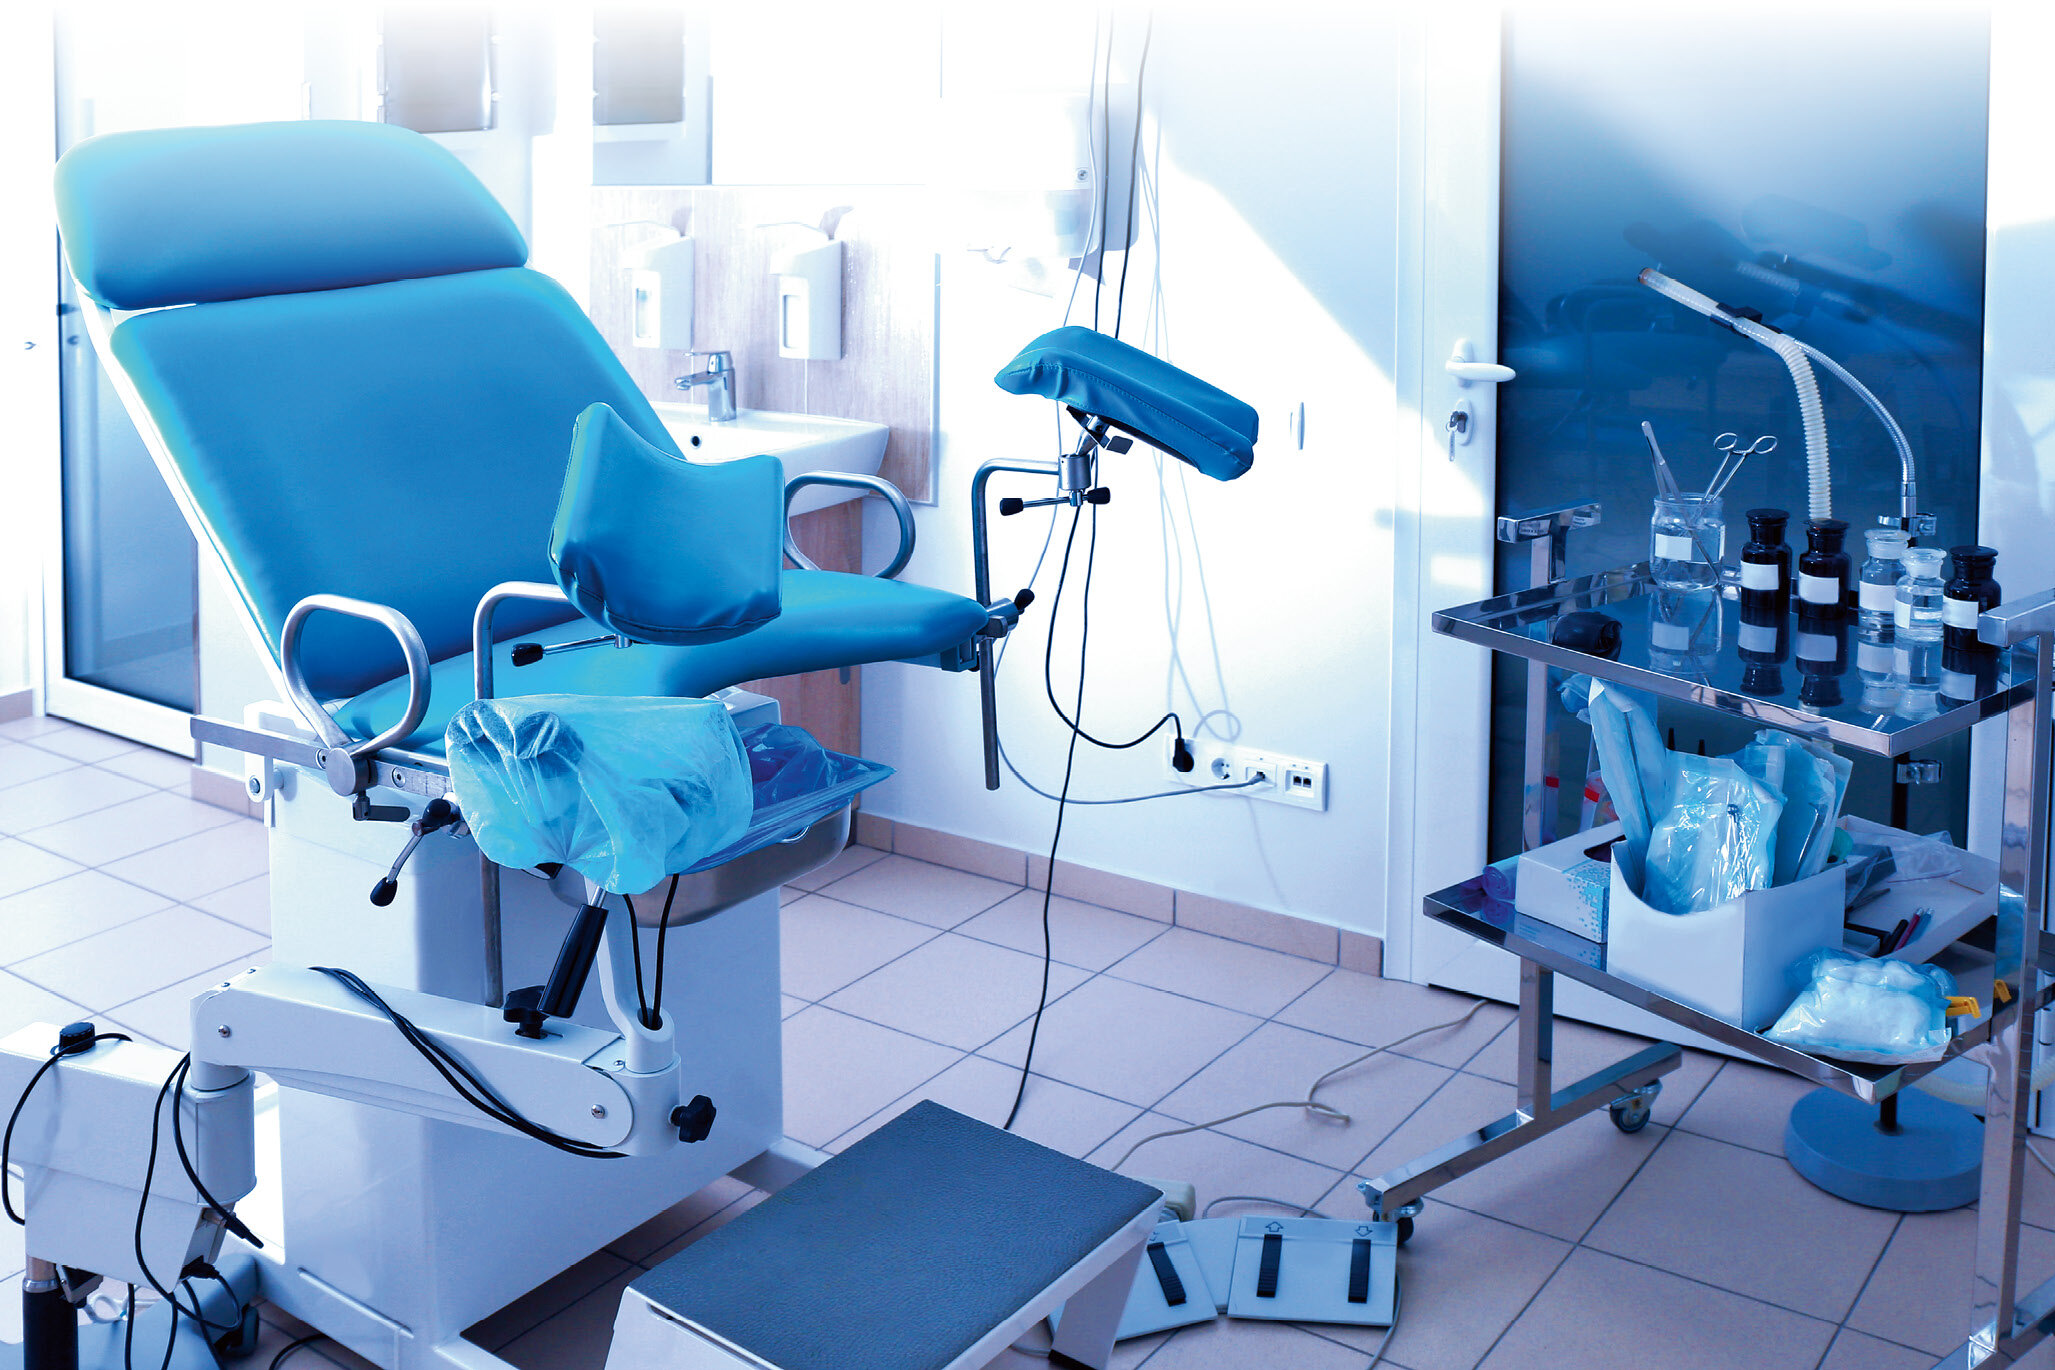 Кресло врача гинеколога. "КСН 9" кресло стоматологическое. Гинекологическое кресло. Кресло гинеколога. Смотровой кабинет гинеколога.